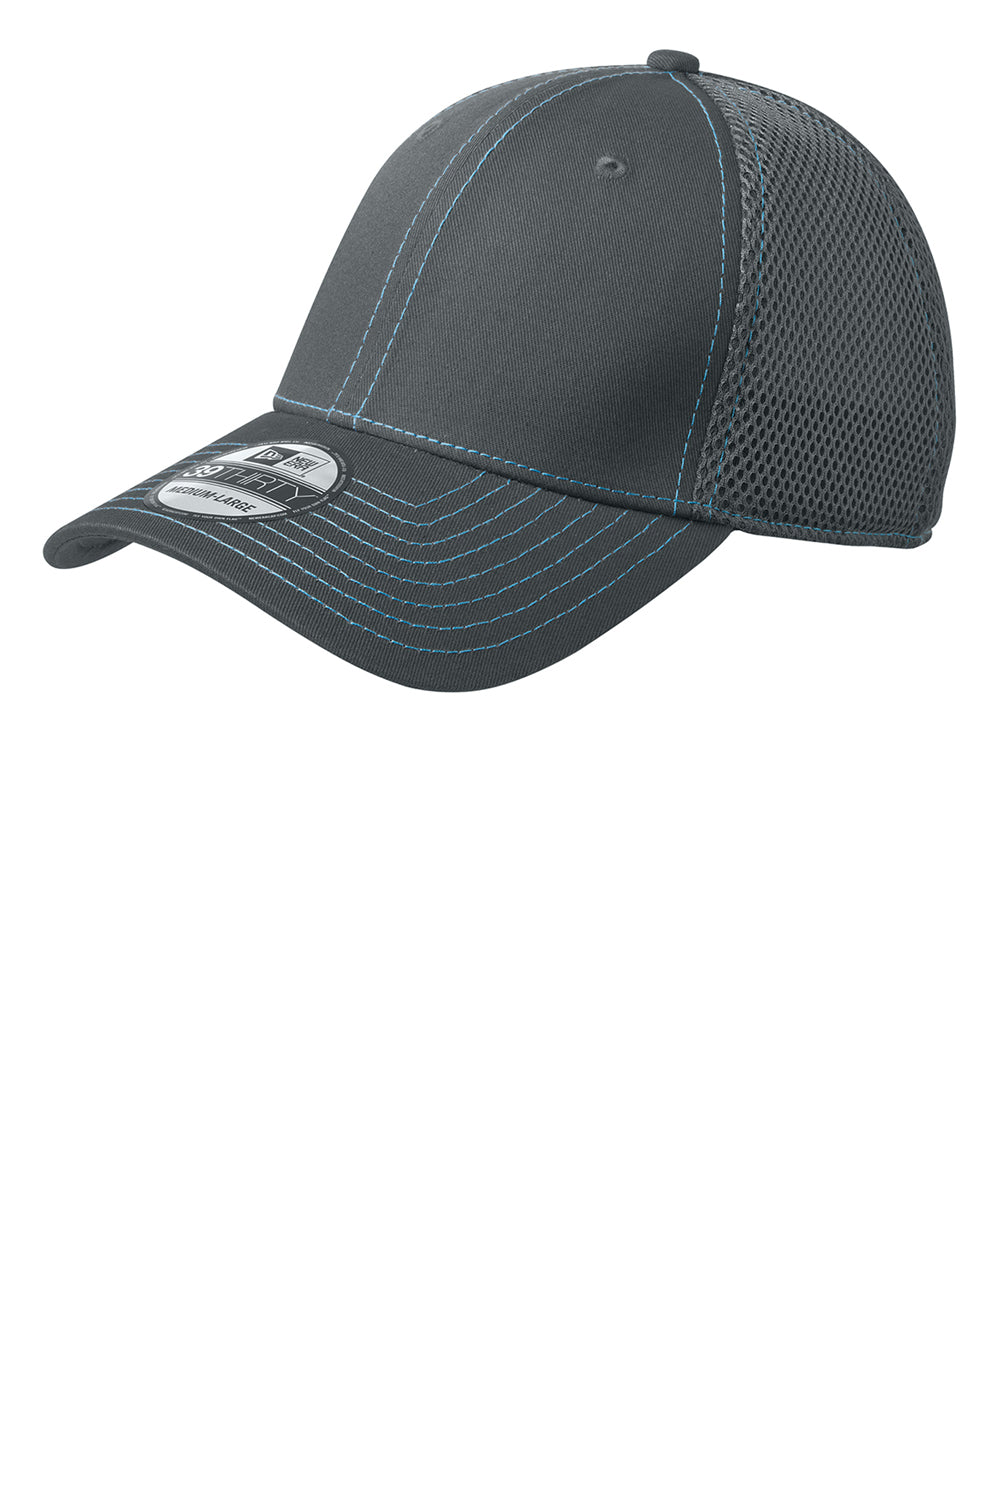 New Era NE1120 Mens Stretch Fit Hat Graphite Grey/Vice Blue Front